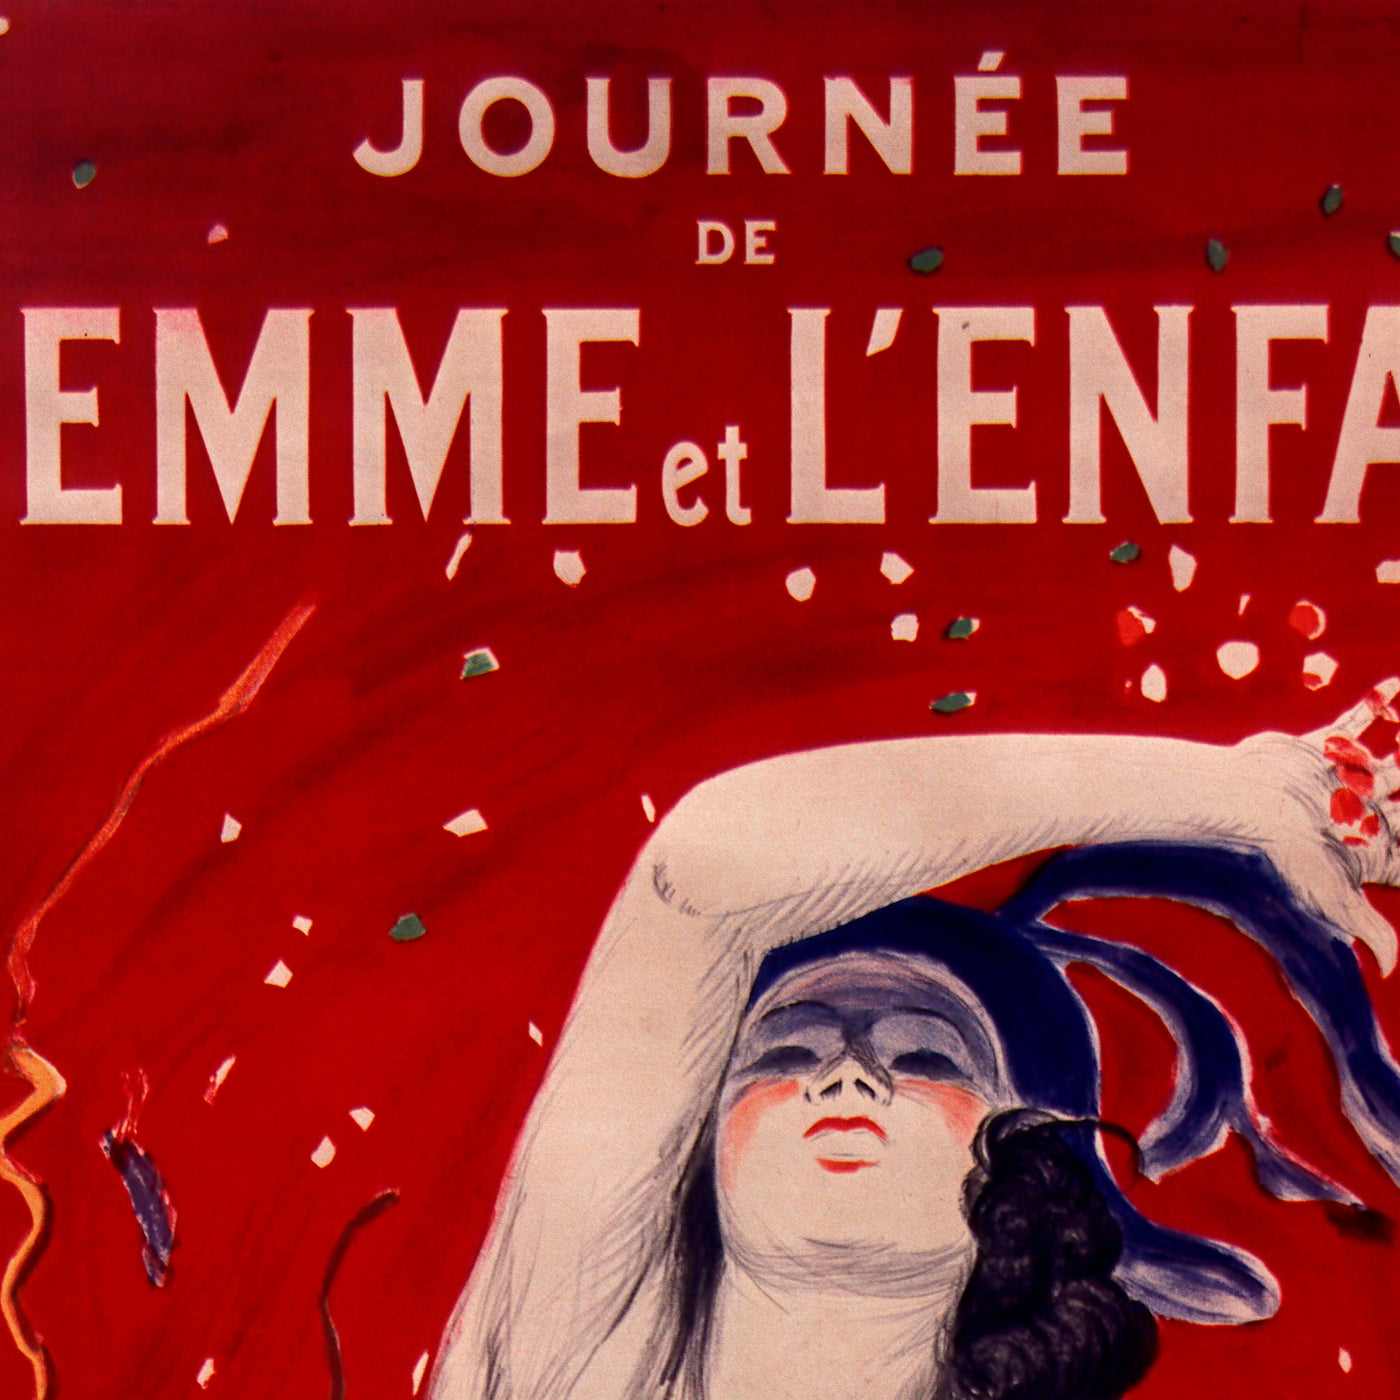 La Femme et L'enfant vintage poster wall art. old maps and vintage posters shop archive print co